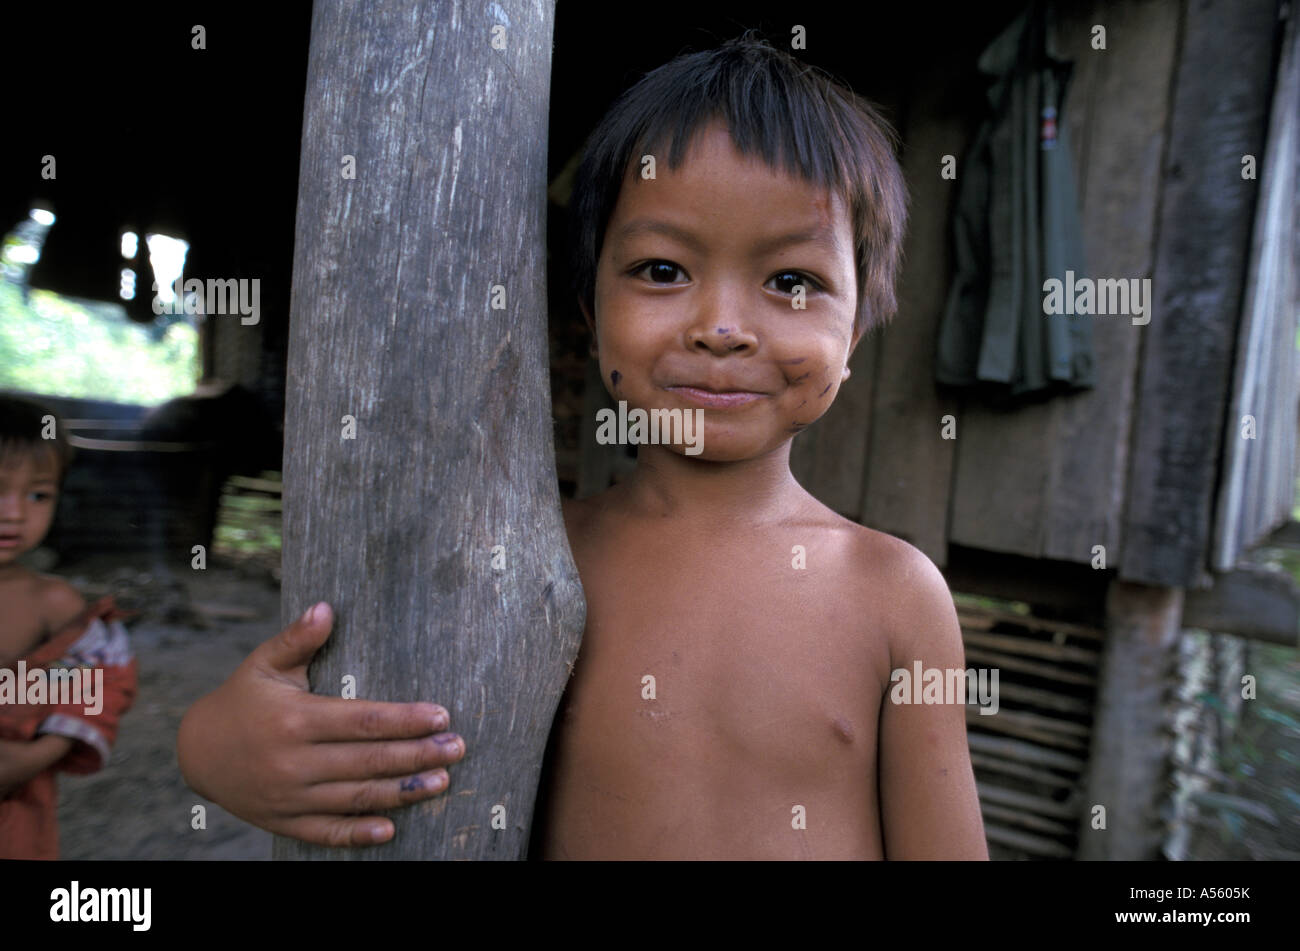 Painet ix1855 cambodia boy tahoey village ratanakiri country developing nation less economically developed culture emerging Stock Photo